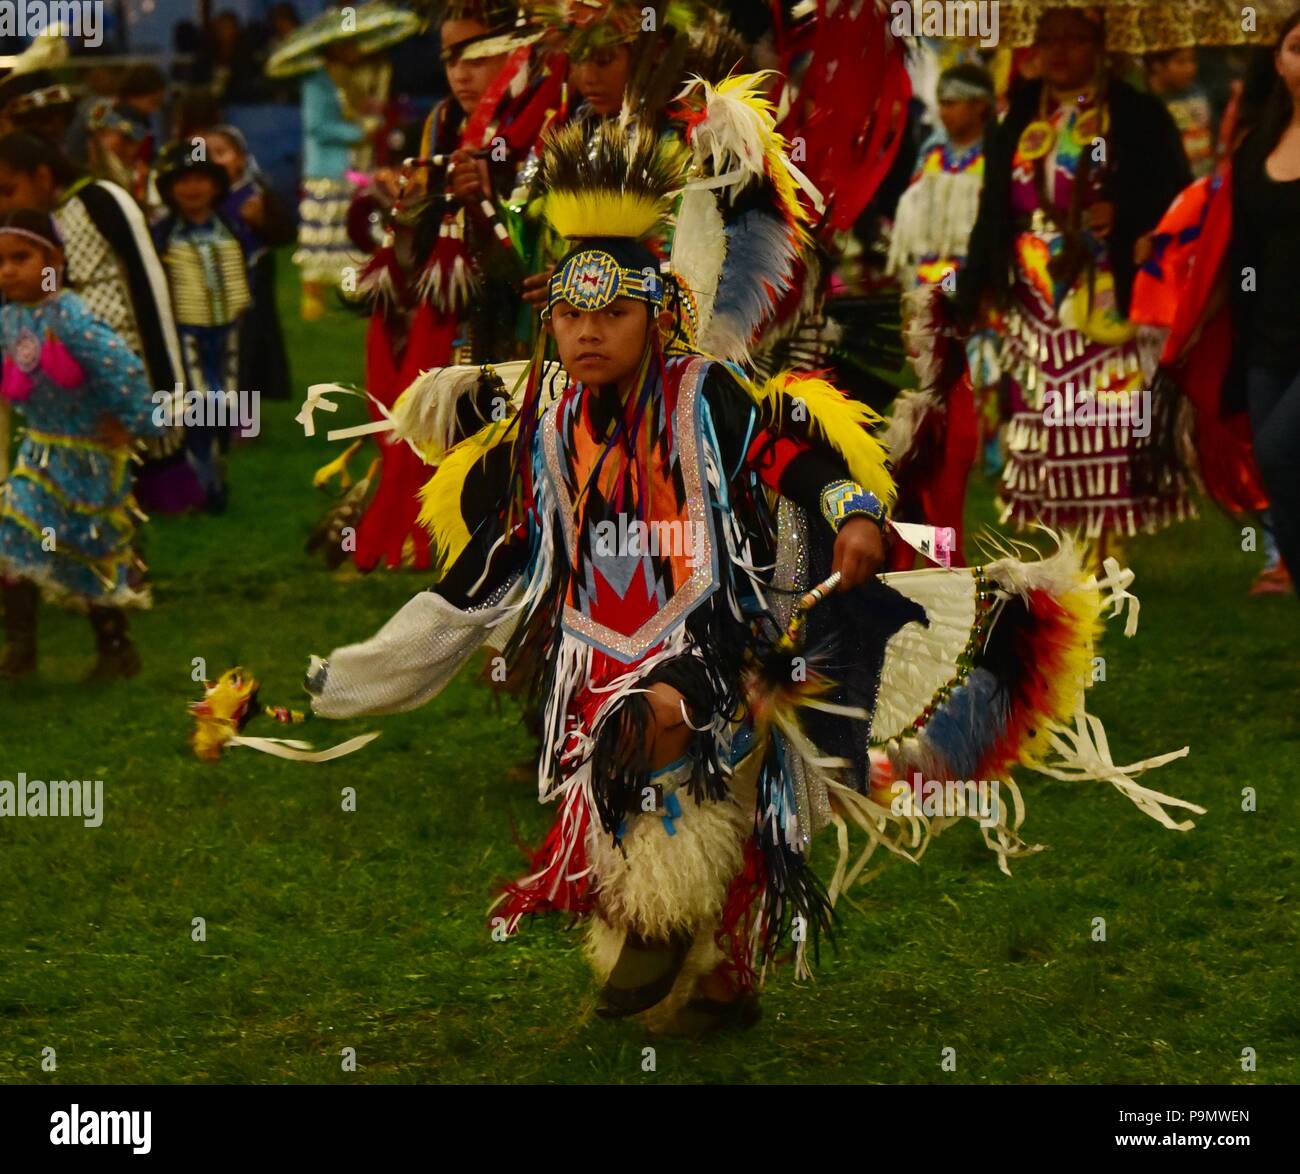 American Indian Festival Pow wow dancer Stock Photo